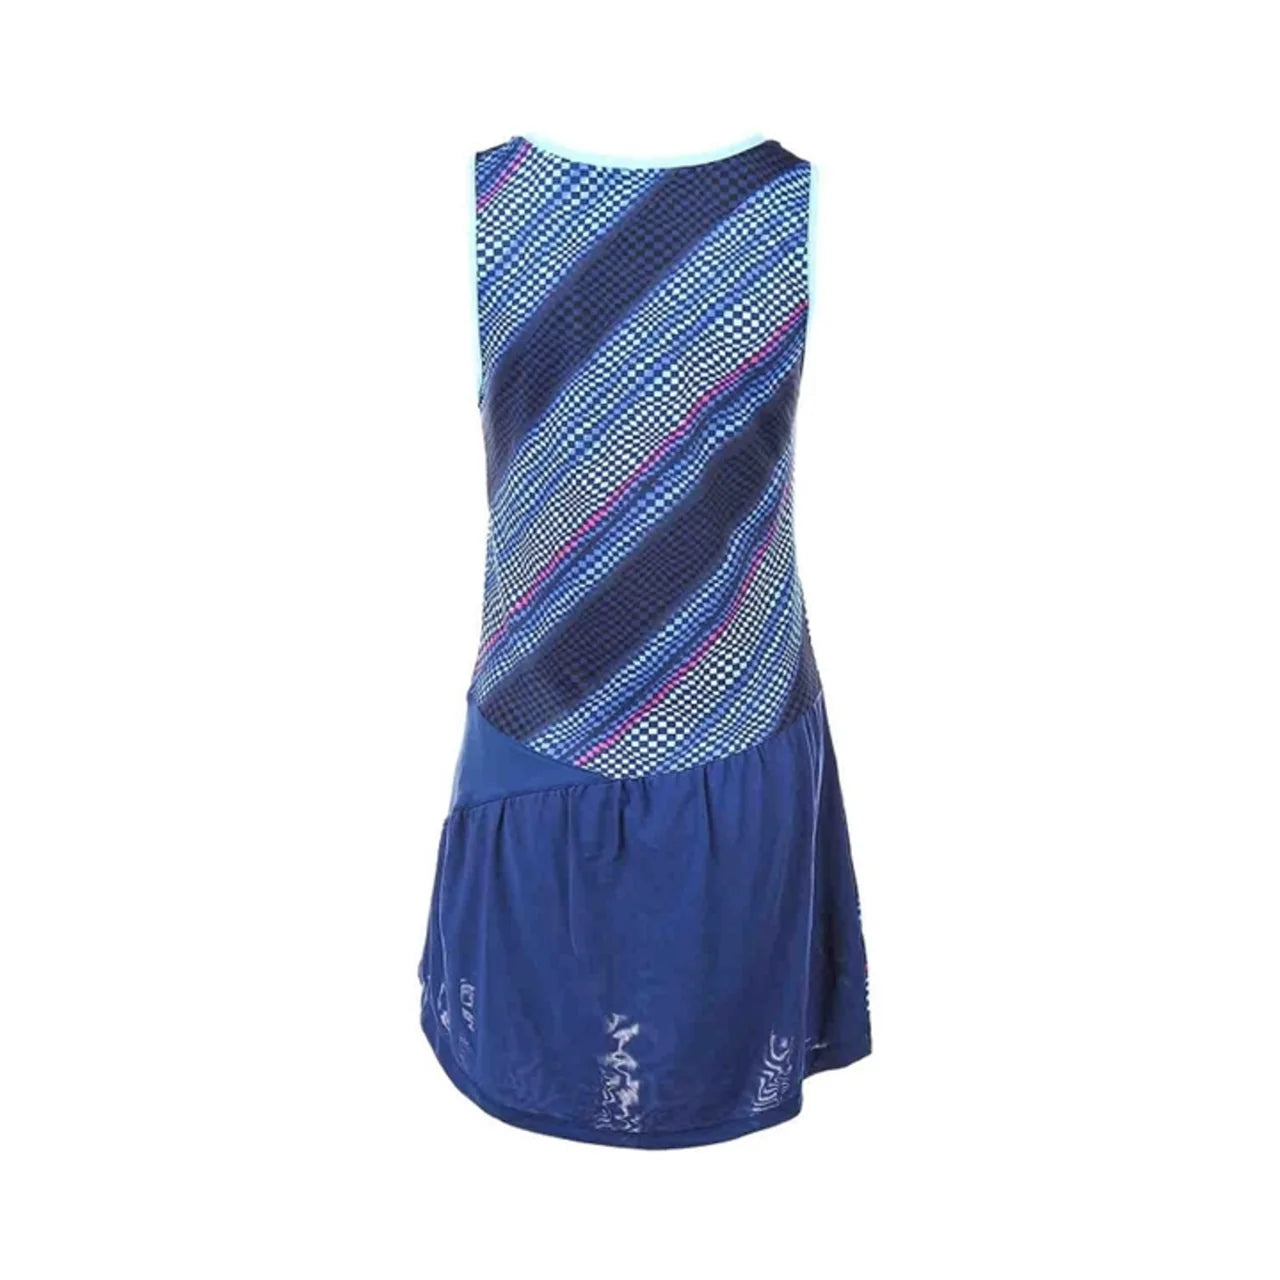 Leslie Badminton Dress (Estate Blue)